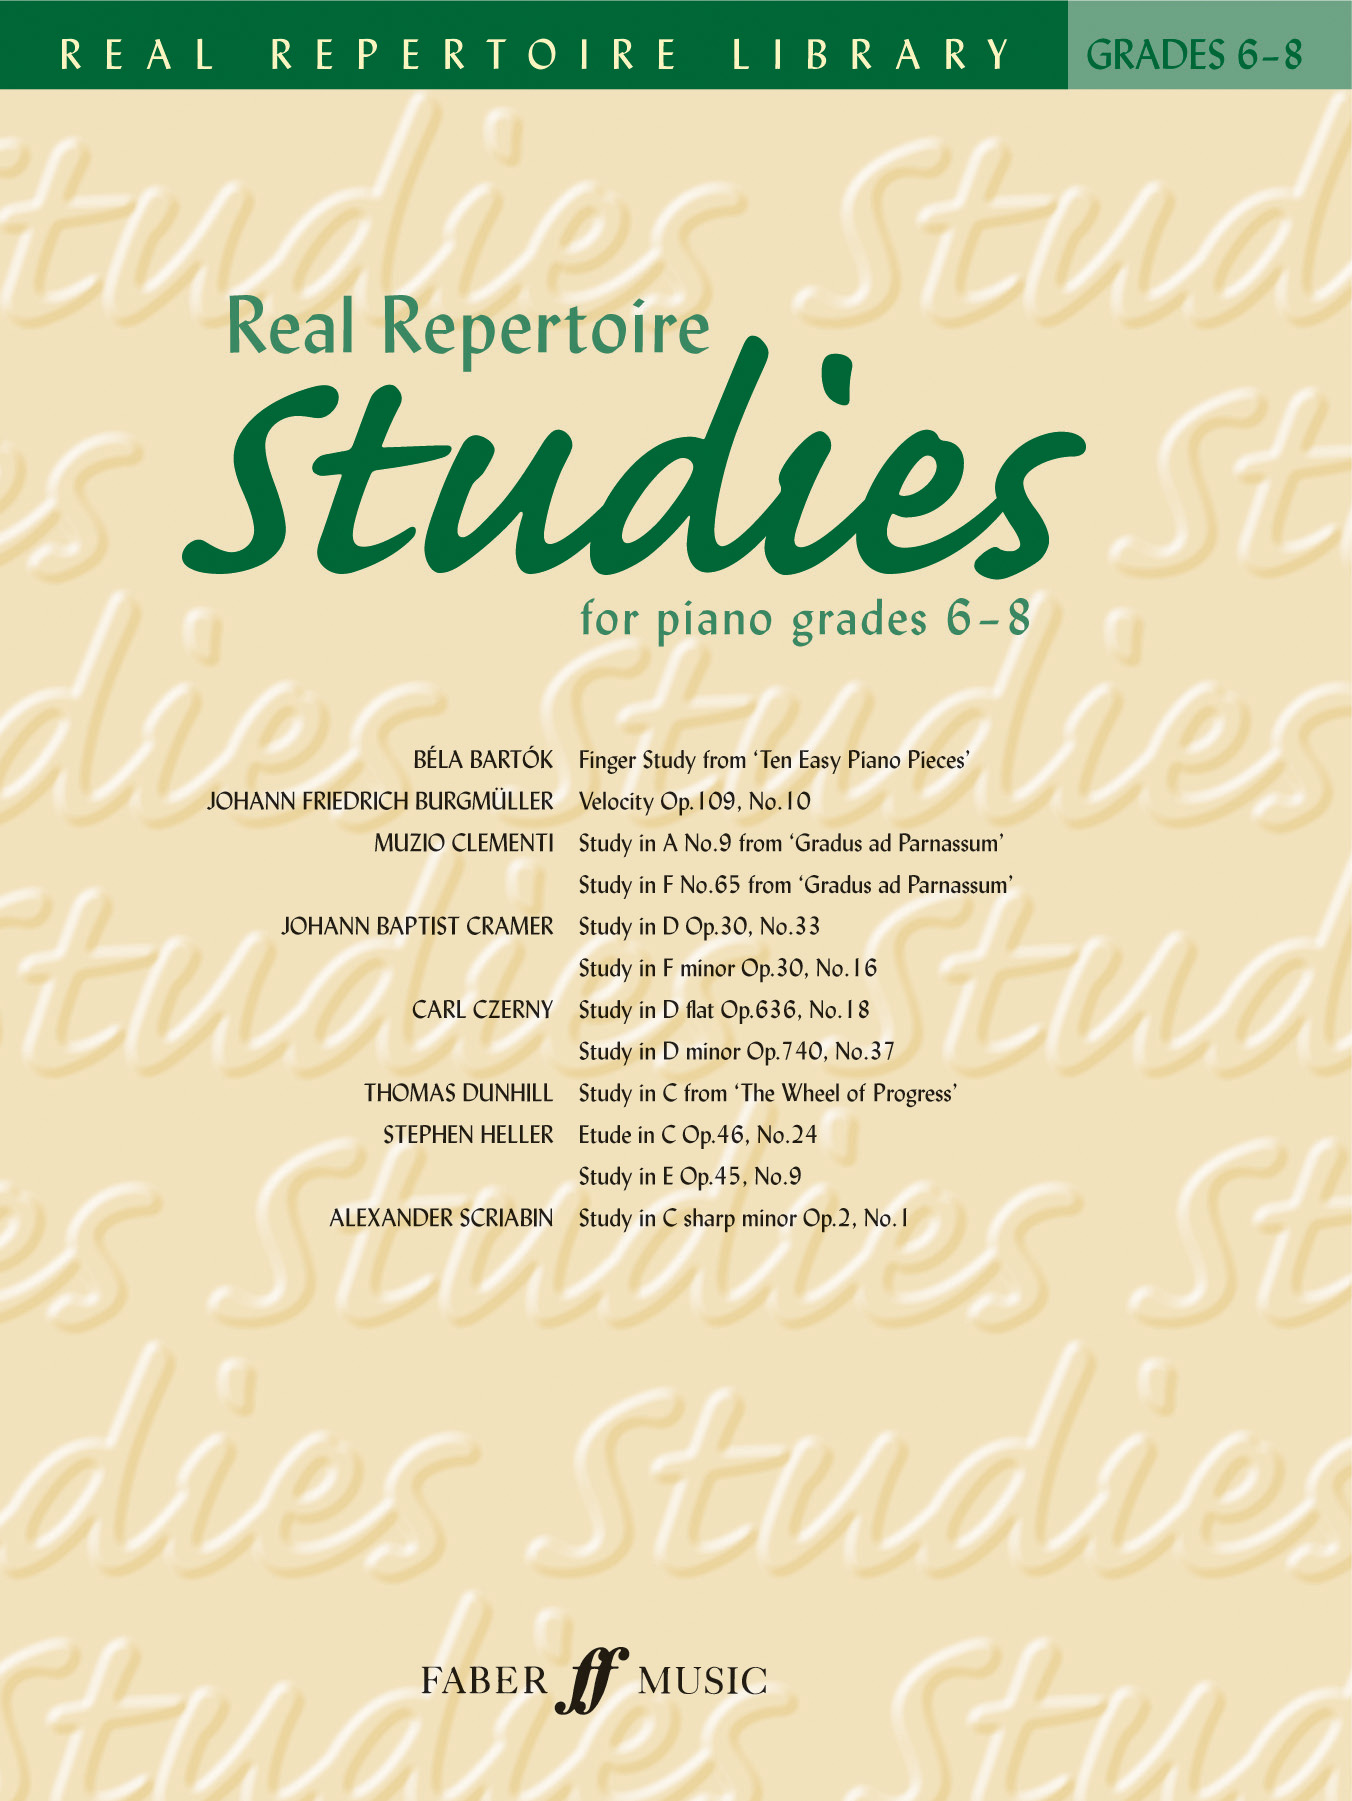 Real Repertoire studies. Grades 6-8: Piano: Instrumental Album